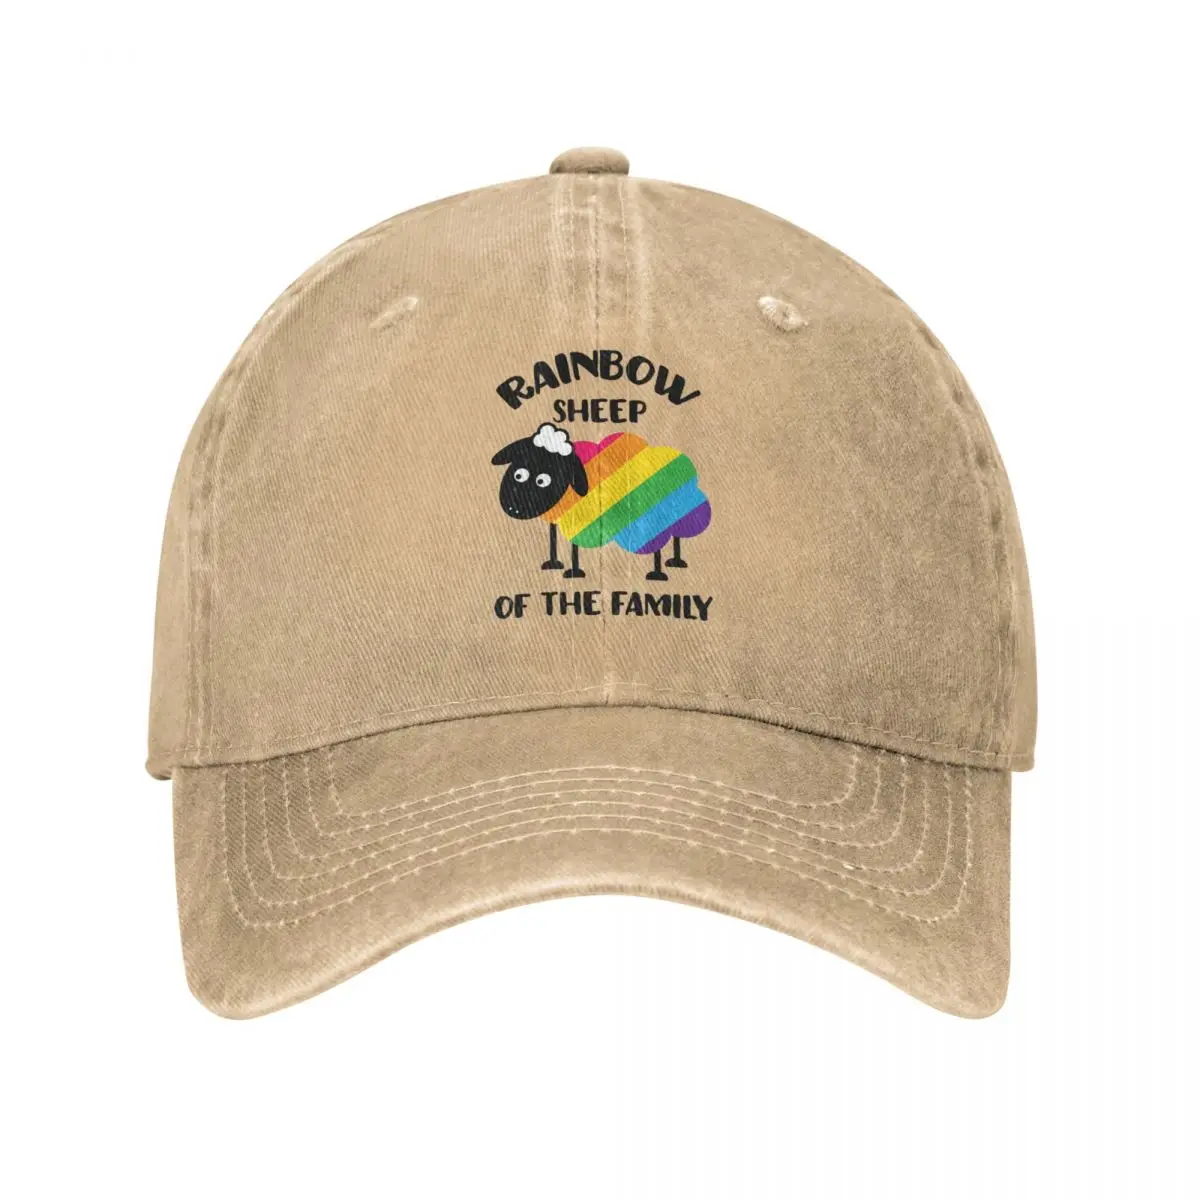 

Rainbow Sheep Of The Family LGBT Pride Baseball Caps Classic Distressed Denim Headwear for Men Women Outdoor Activities Hats Cap